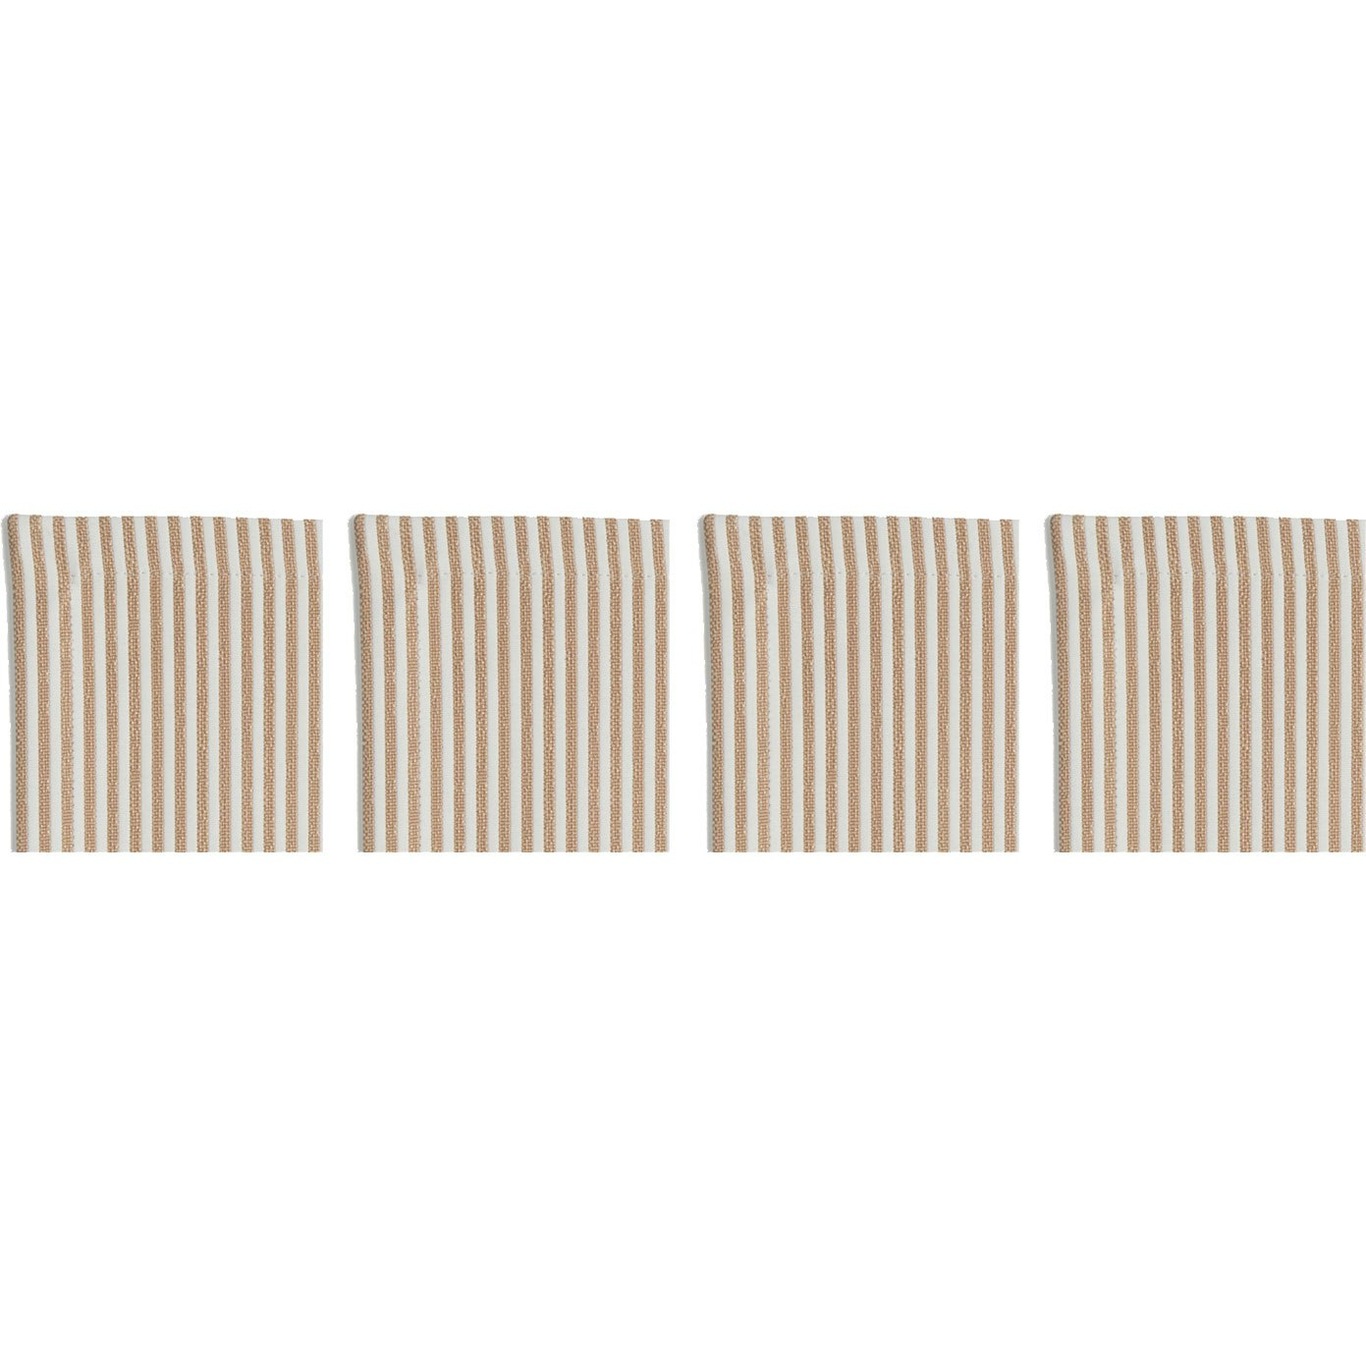 Narrow Stripe Glasunderlägg 10x10 cm 4-pack, Beige